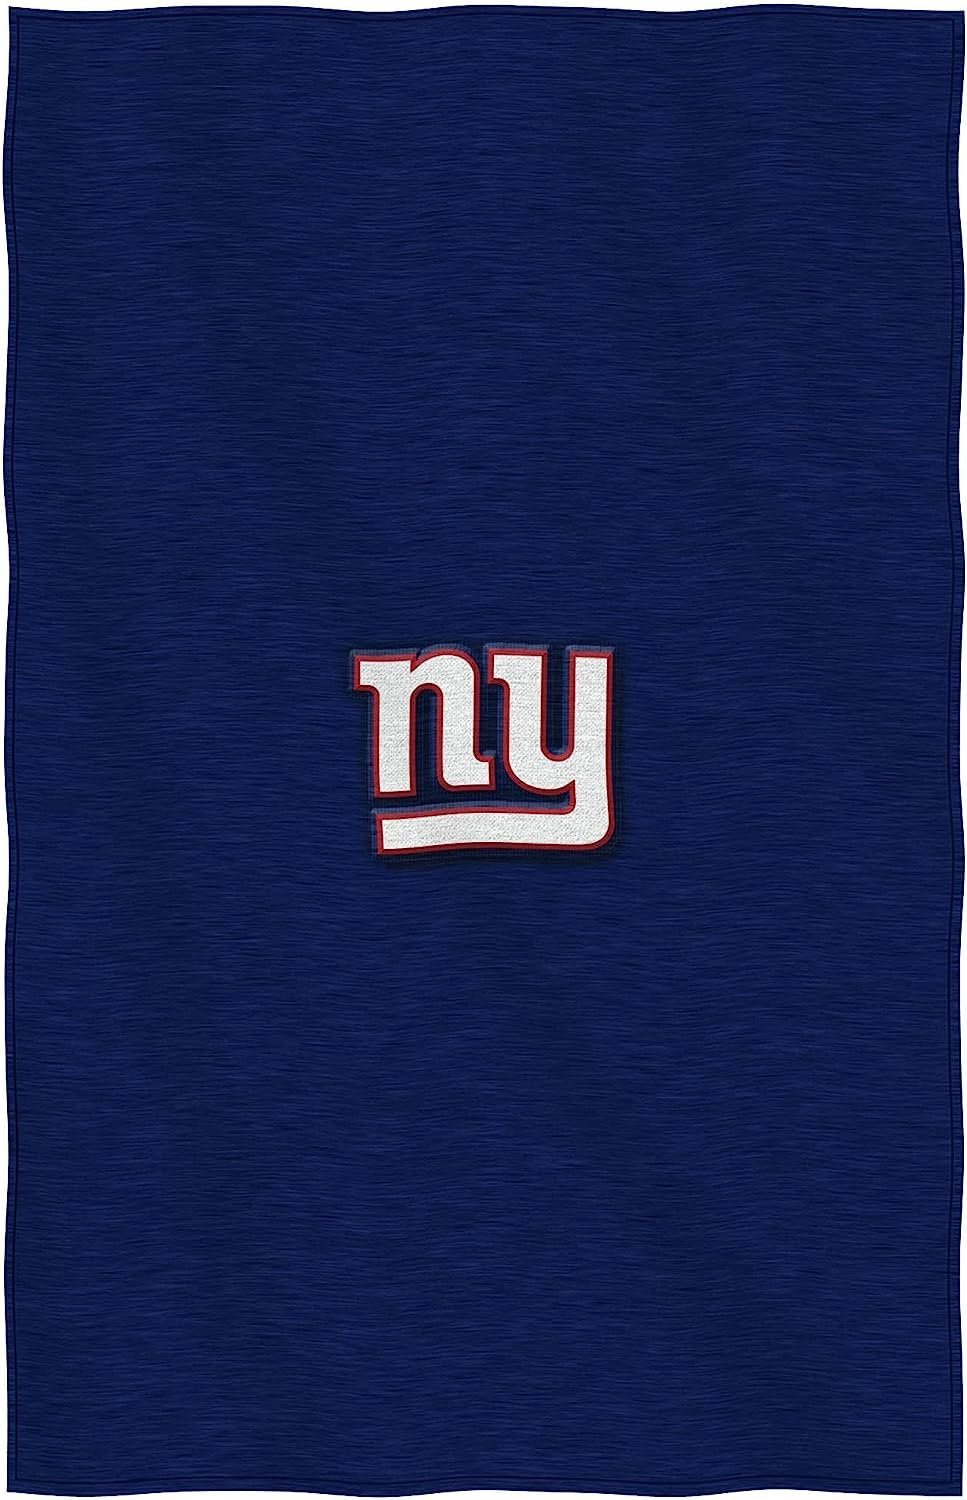 New York Giants Throw Blanket, Sweatshirt Design, Embroidered Logo, Dominate Style, 54x84 Inch